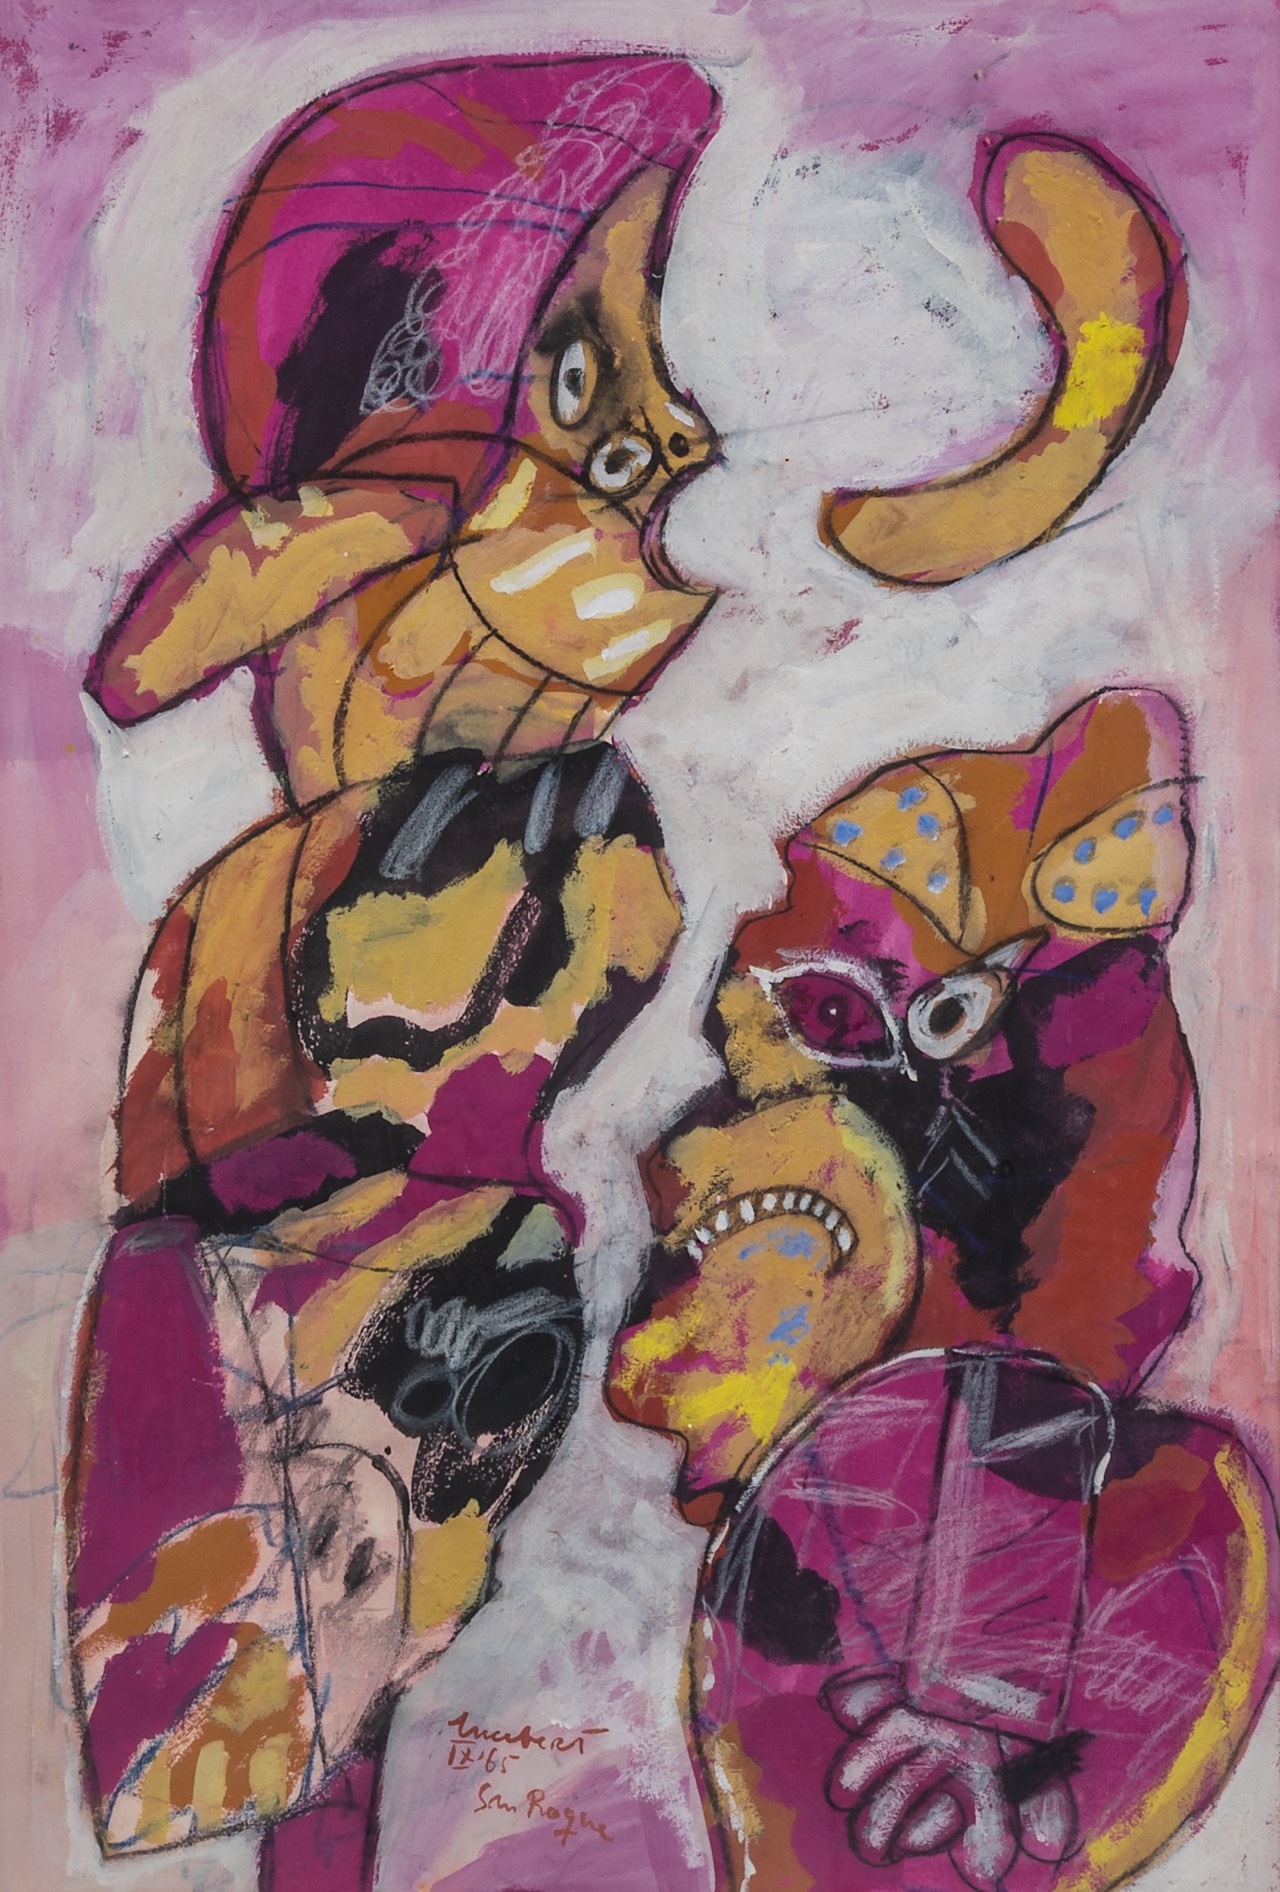 Lucebert (1924-1994), 'San Roque', 1965, pastel and gouache on paper 77 x 52 cm. (30.3 x 20.4 in.),